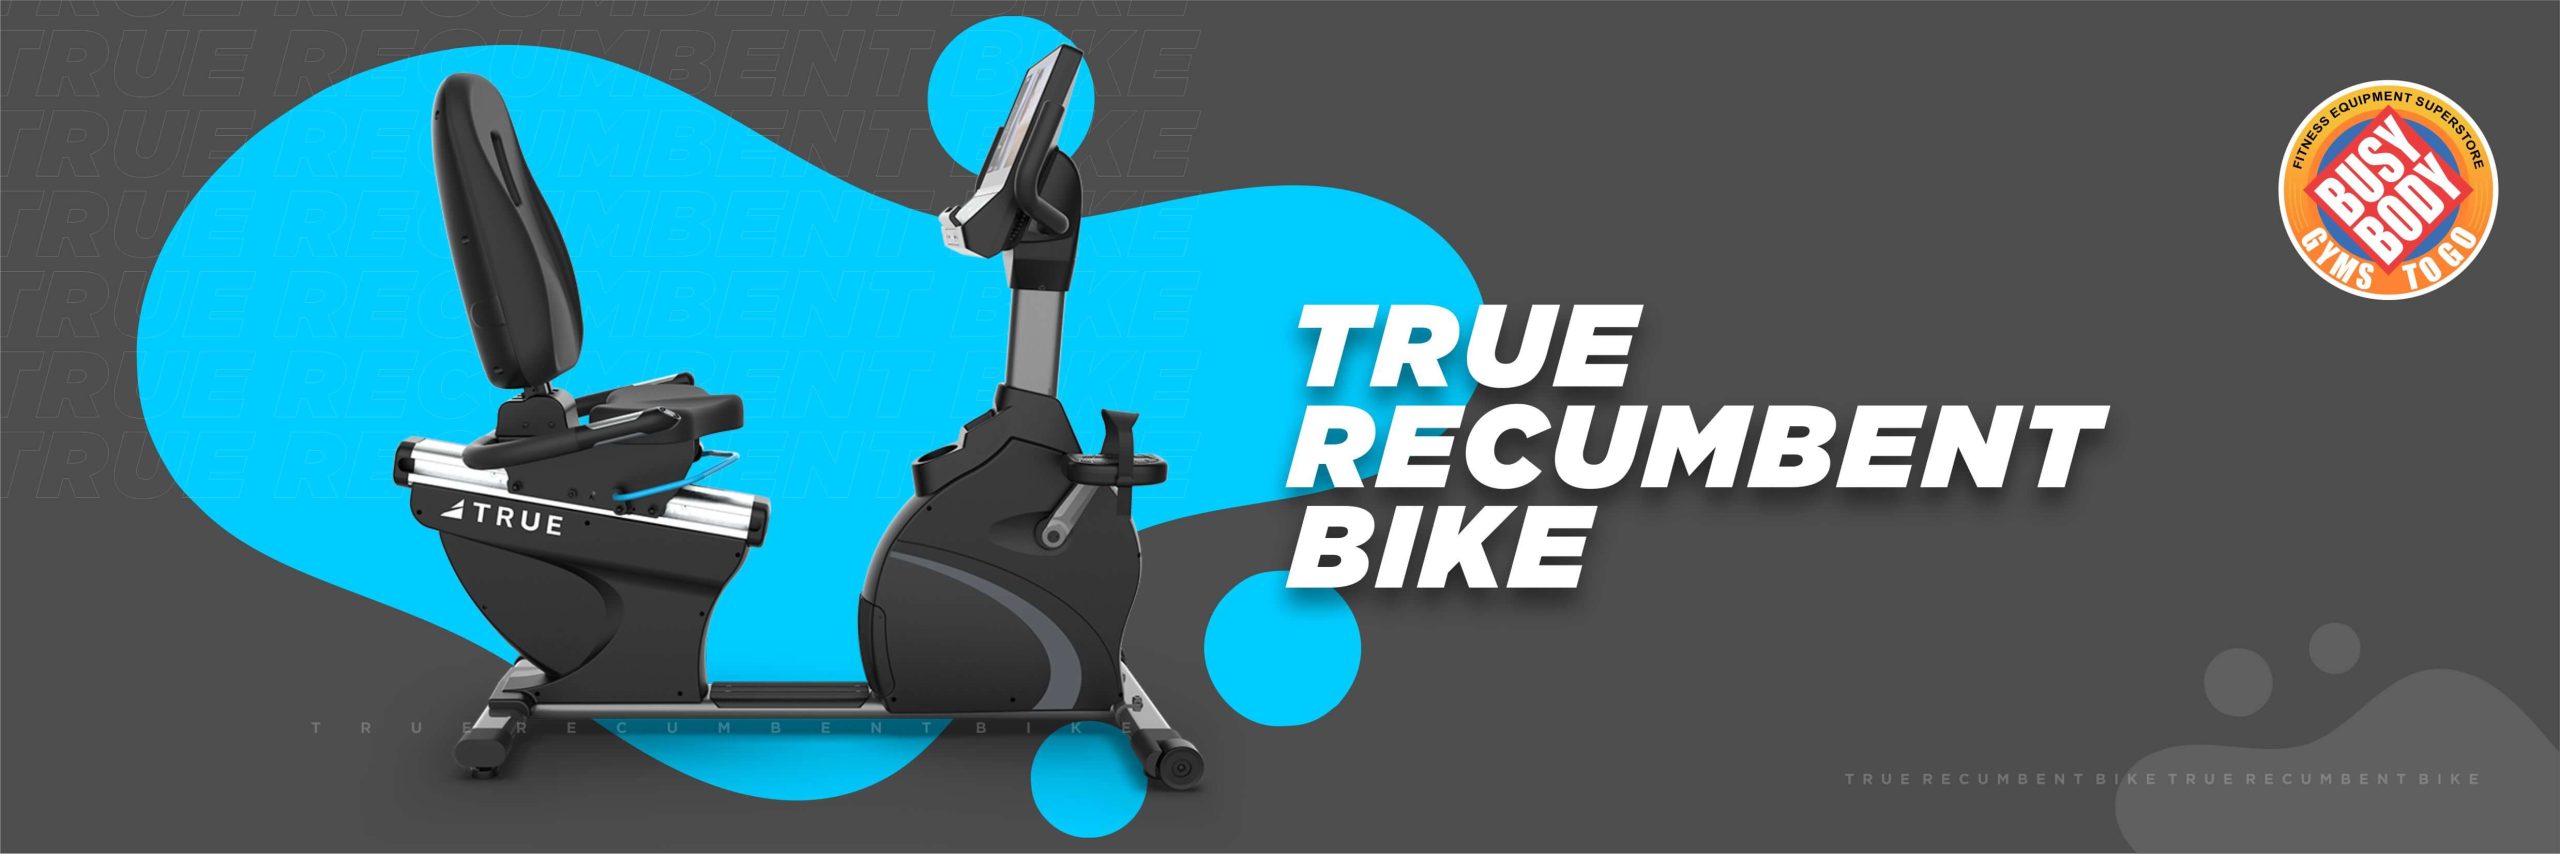 True Recumbent Bike